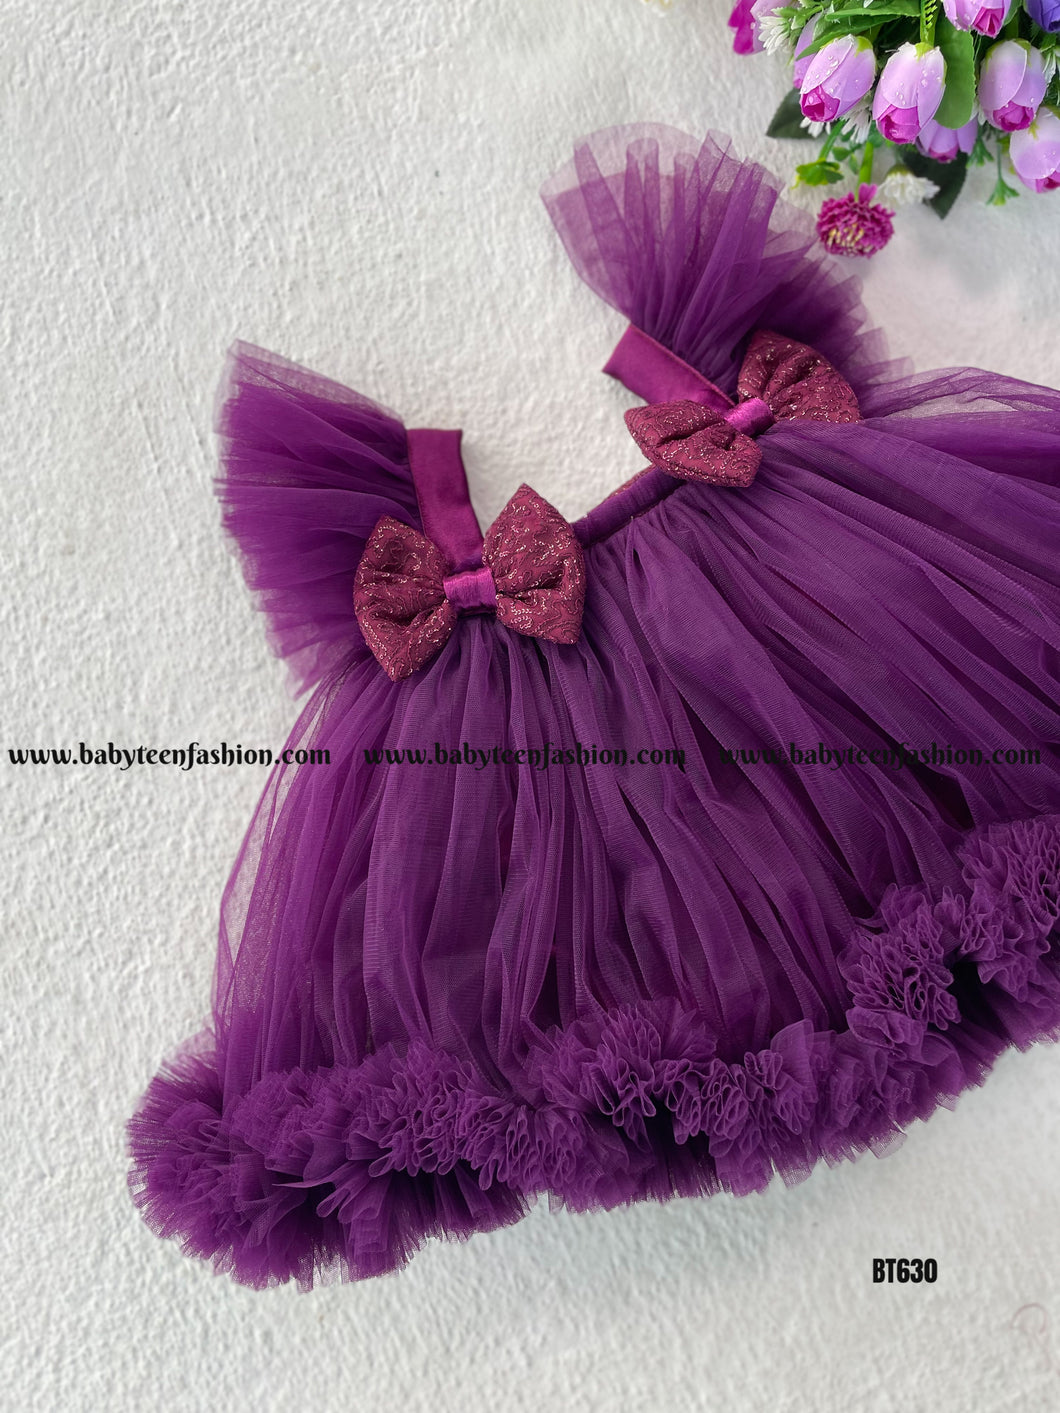 BT630 Sparkle in Every Step - Lavender Princess Dress